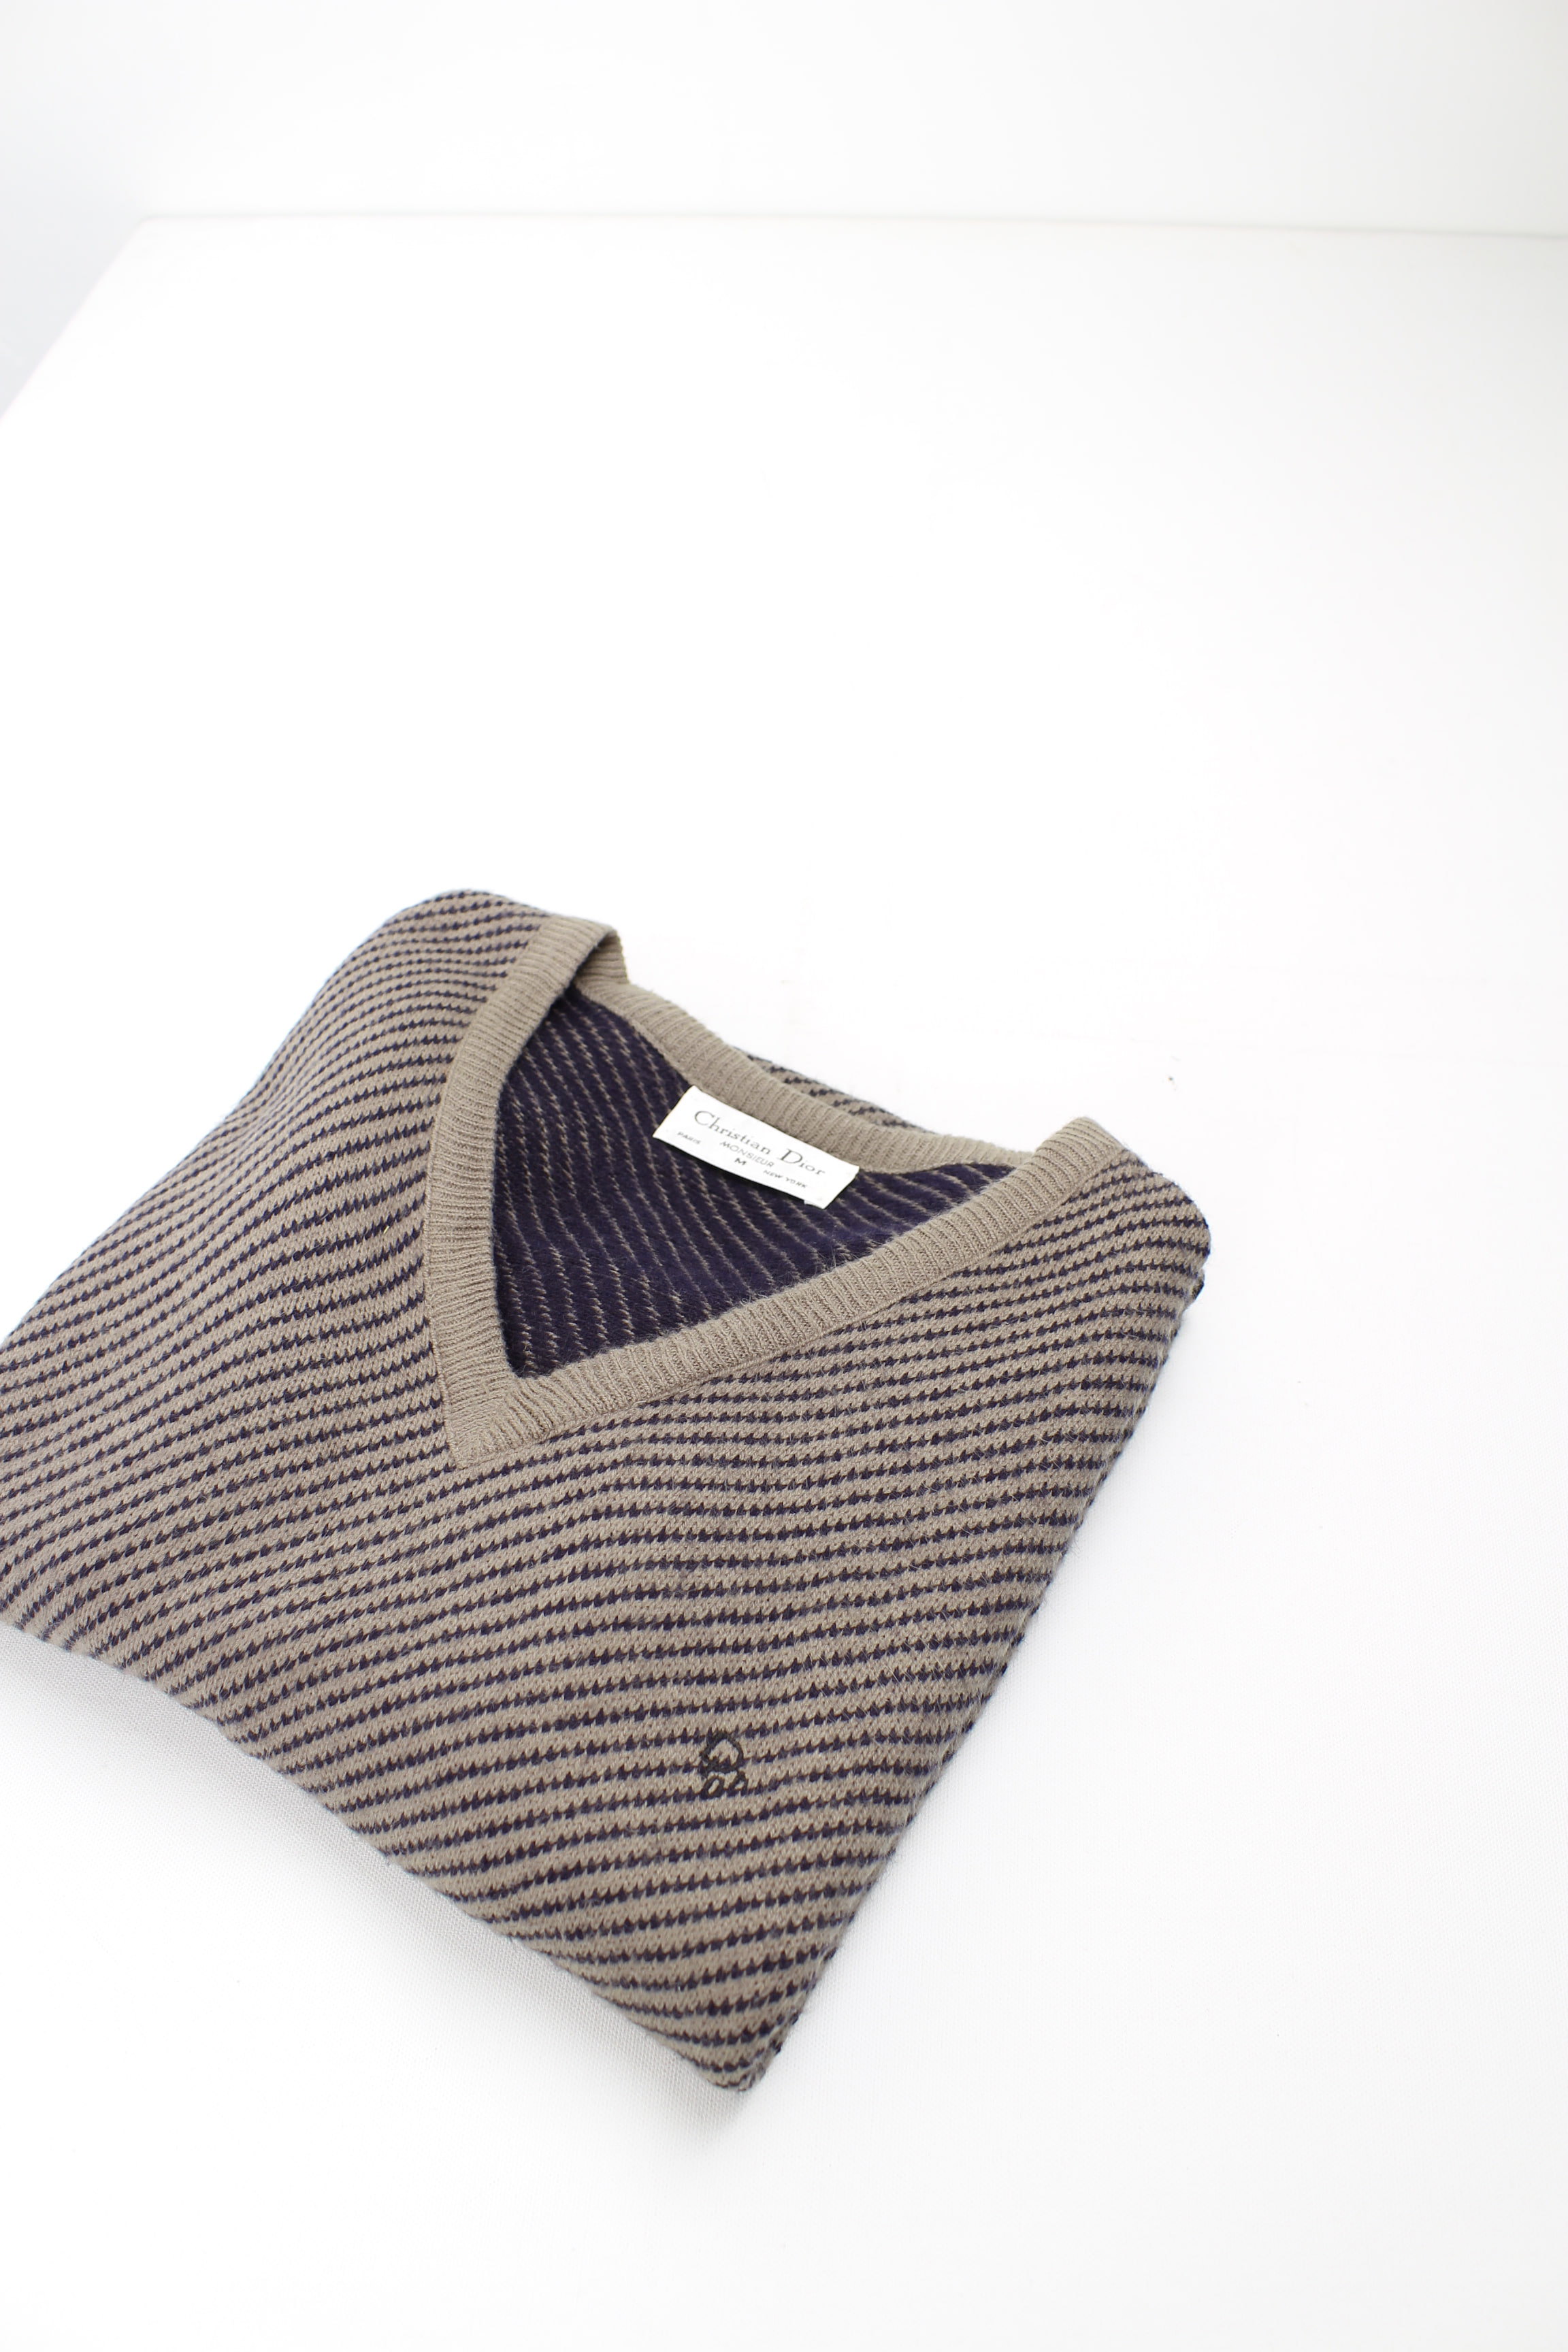 Dior logo knit